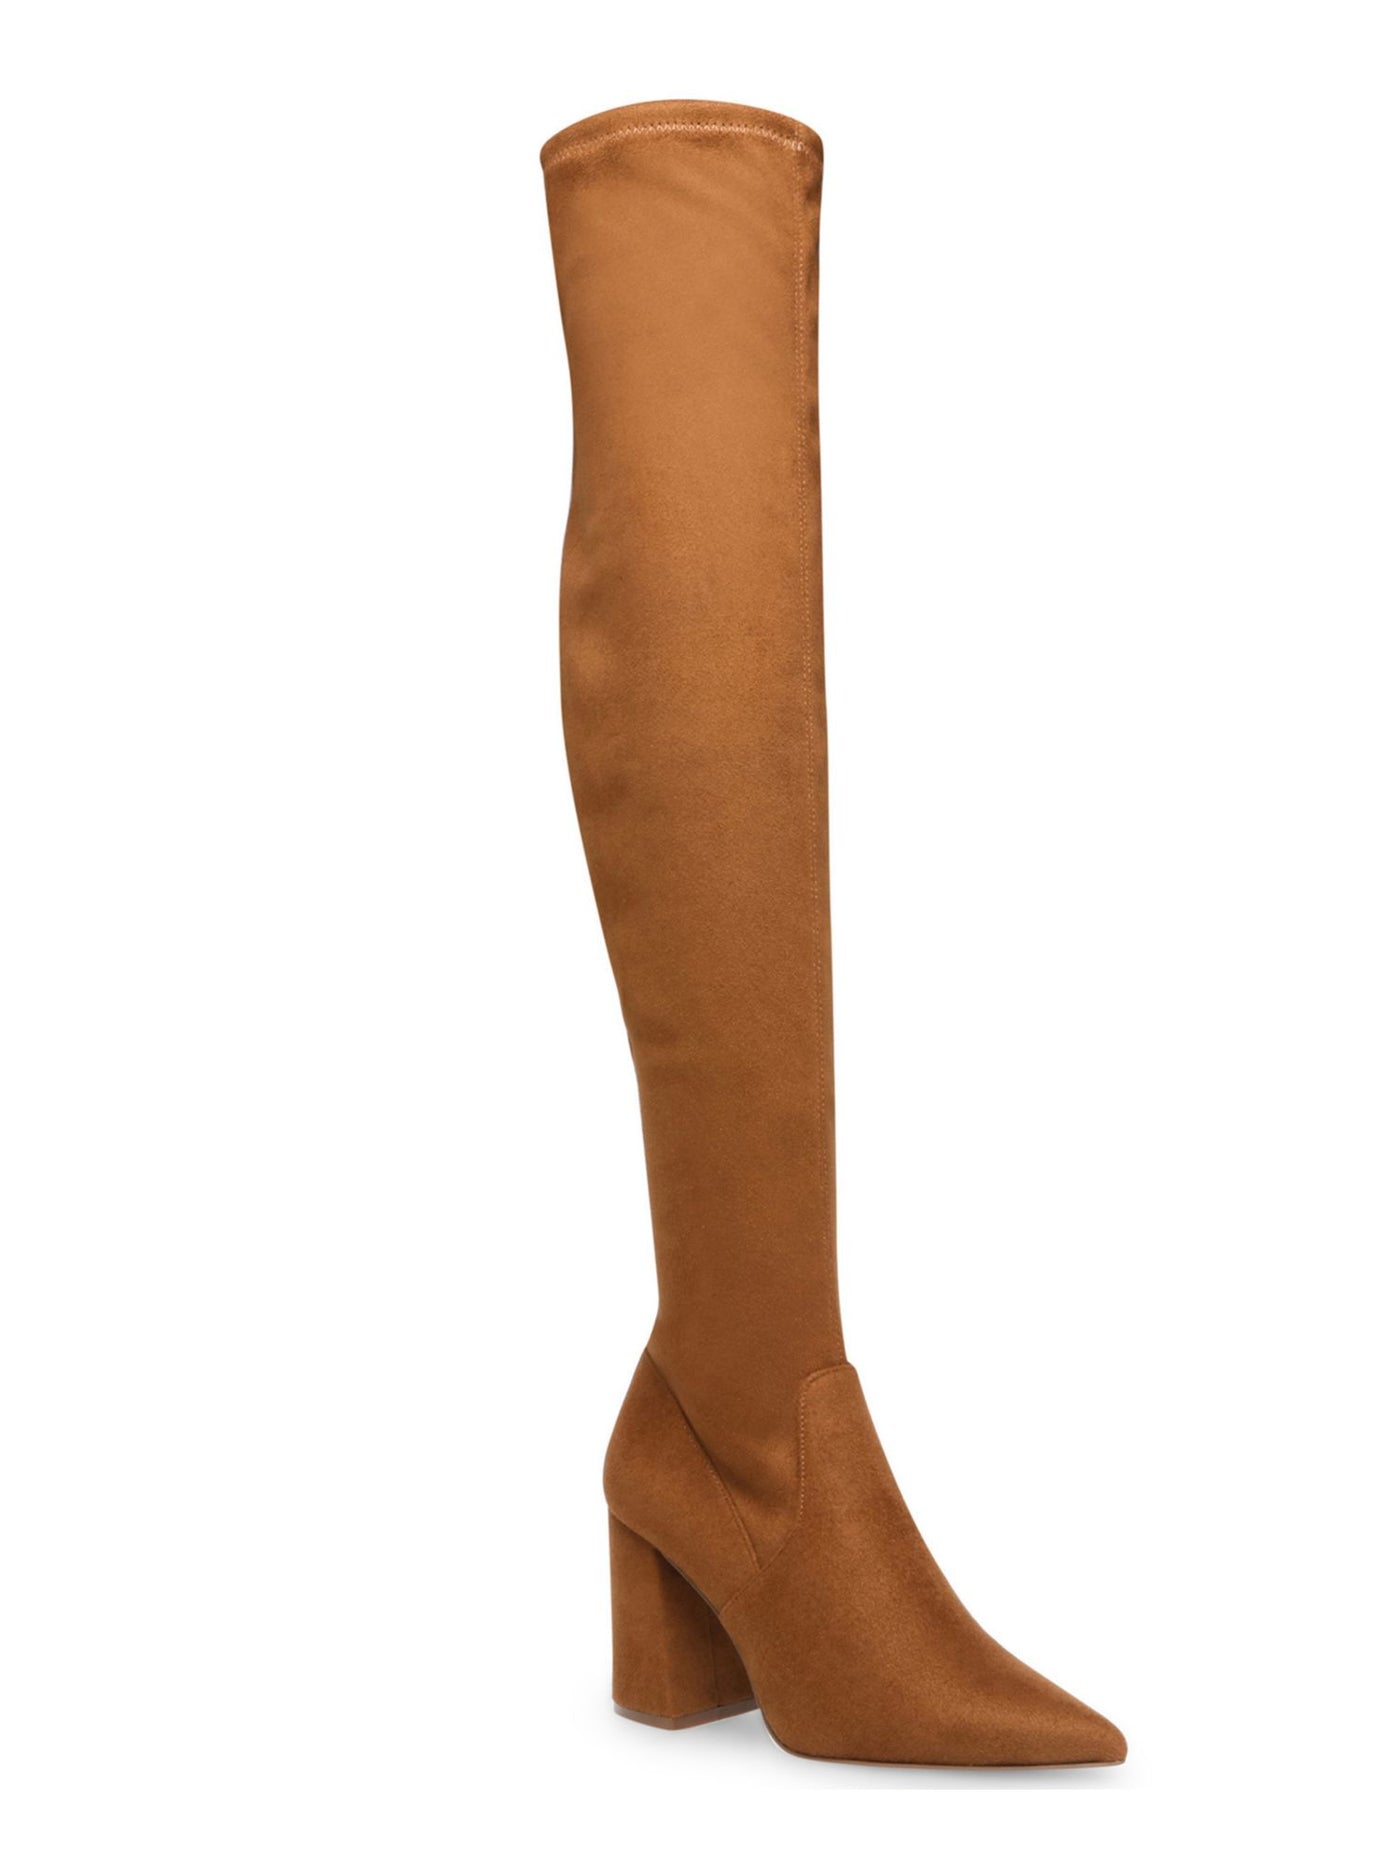 STEVE MADDEN Womens Brown Pointed Toe Block Heel Zip-Up Dress Boots 9